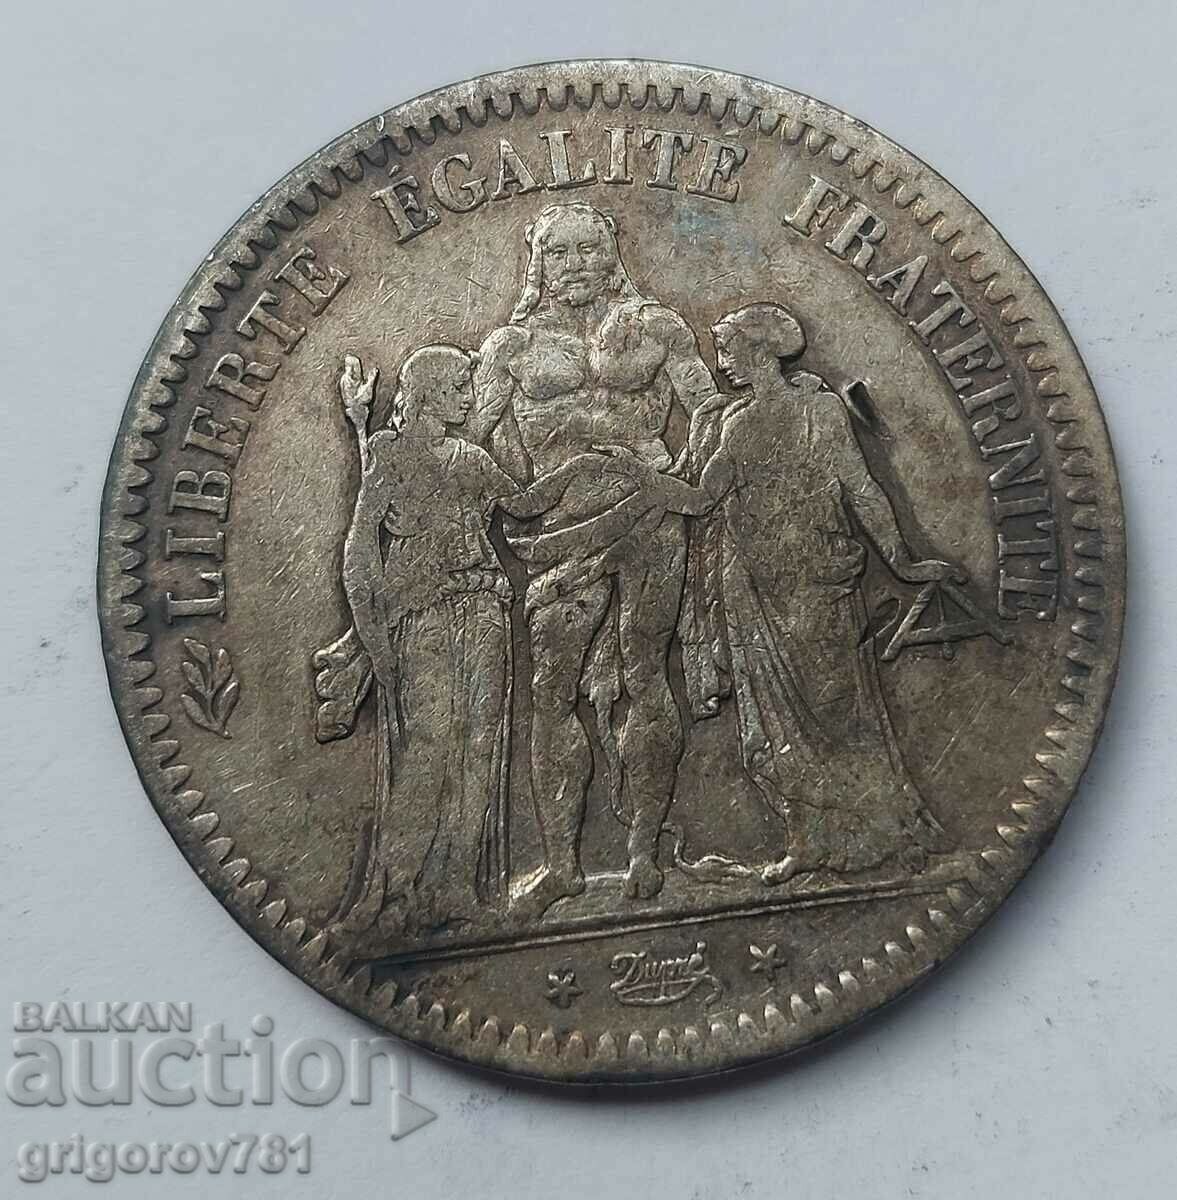 5 Francs Silver France 1848 A Silver Coin #147